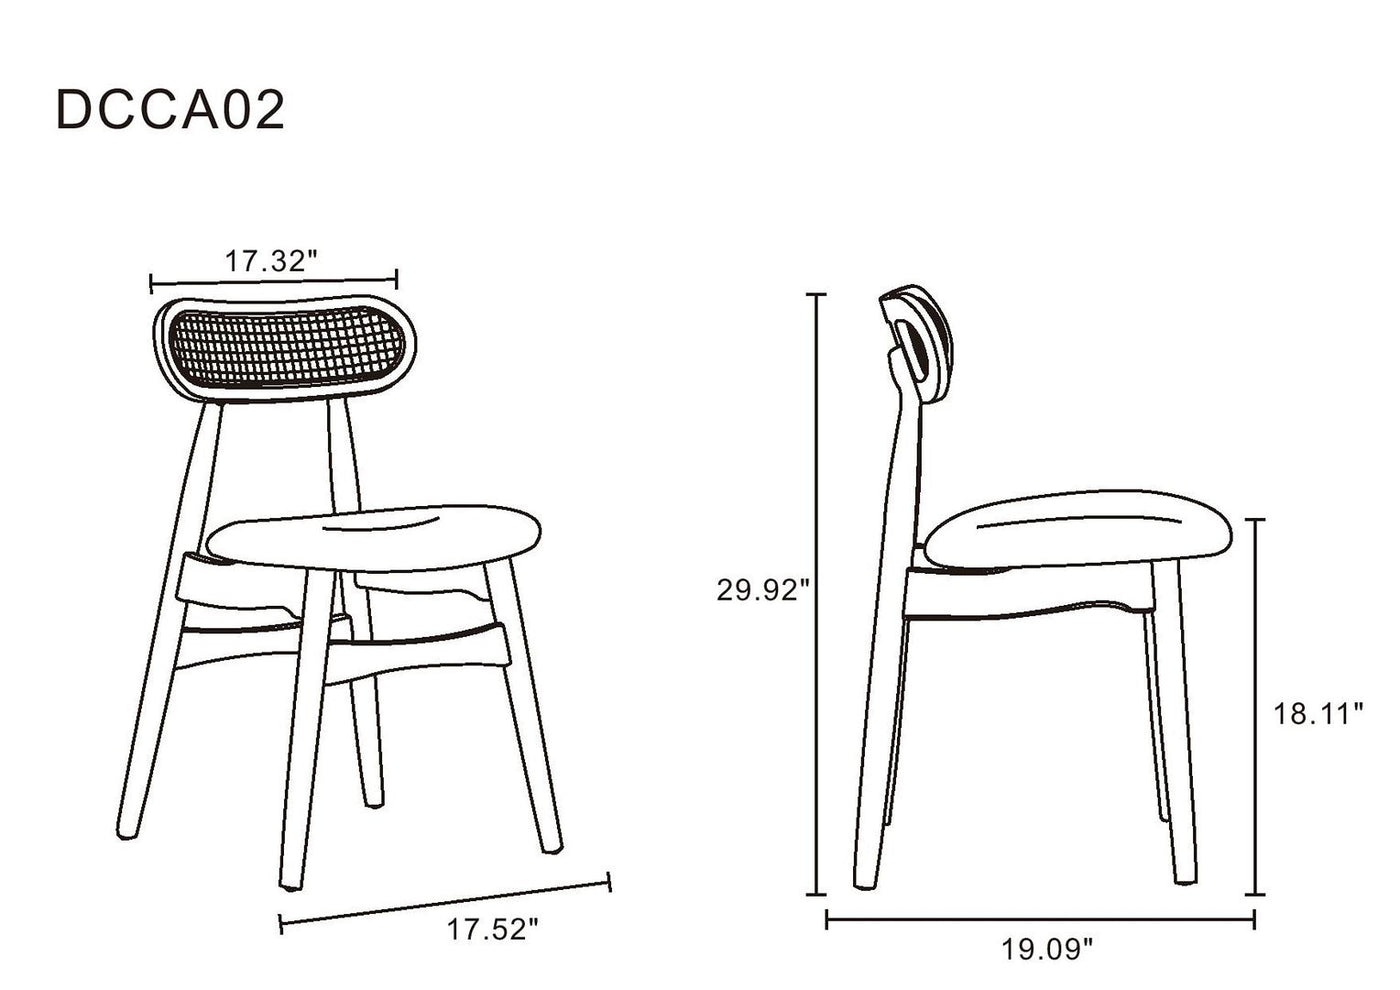 Oliver Dining Chair - Black/Grey - Set of 4